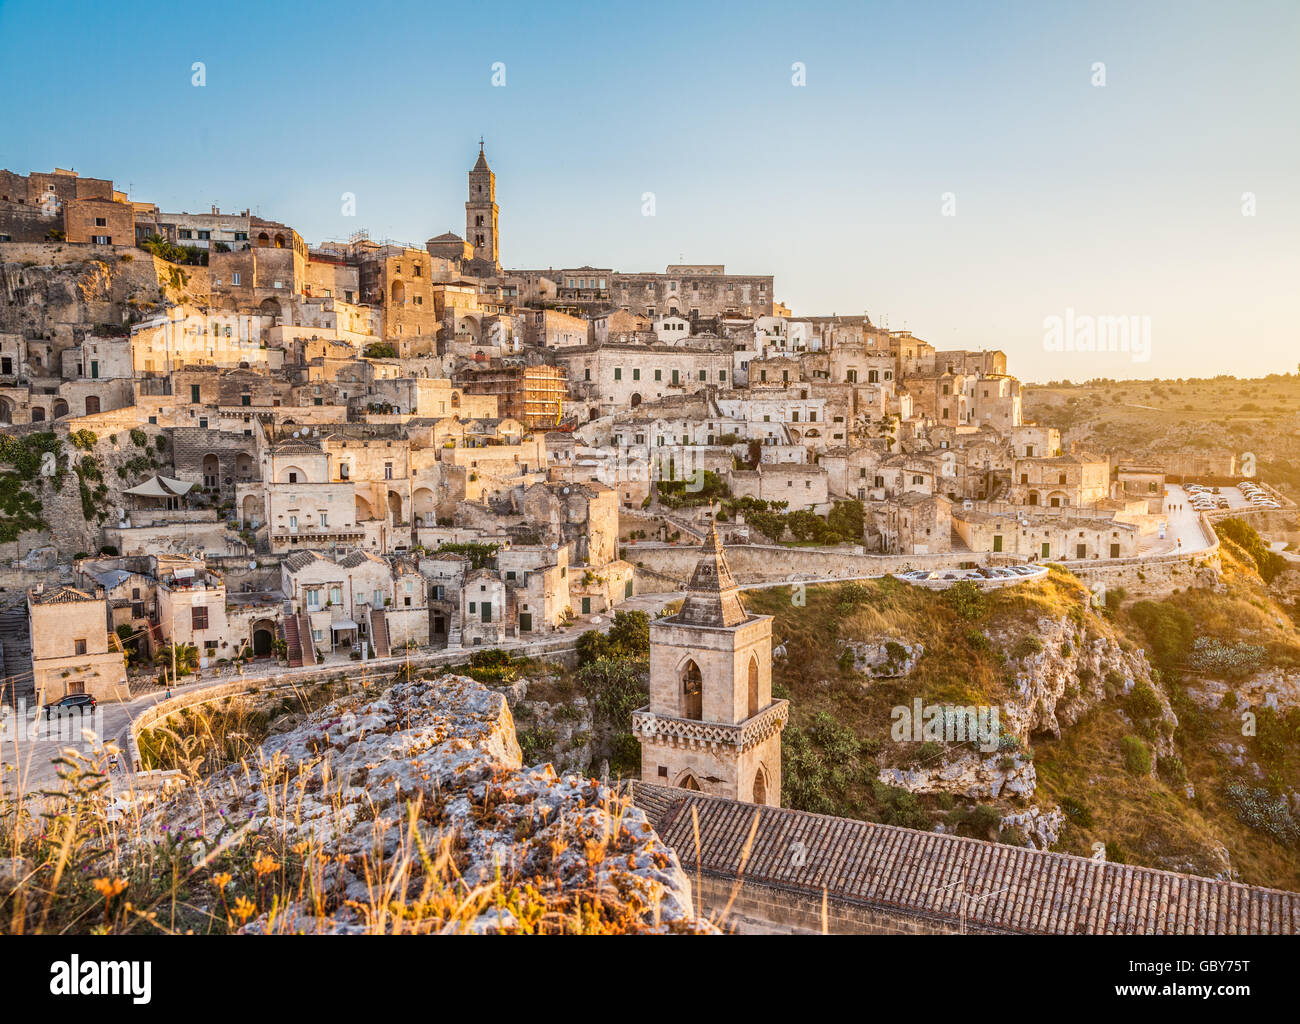 Ancient town of Matera (Sassi di Matera), European Capital of Culture 2019, in beautiful golden morning light, Basilicata, Italy Stock Photo